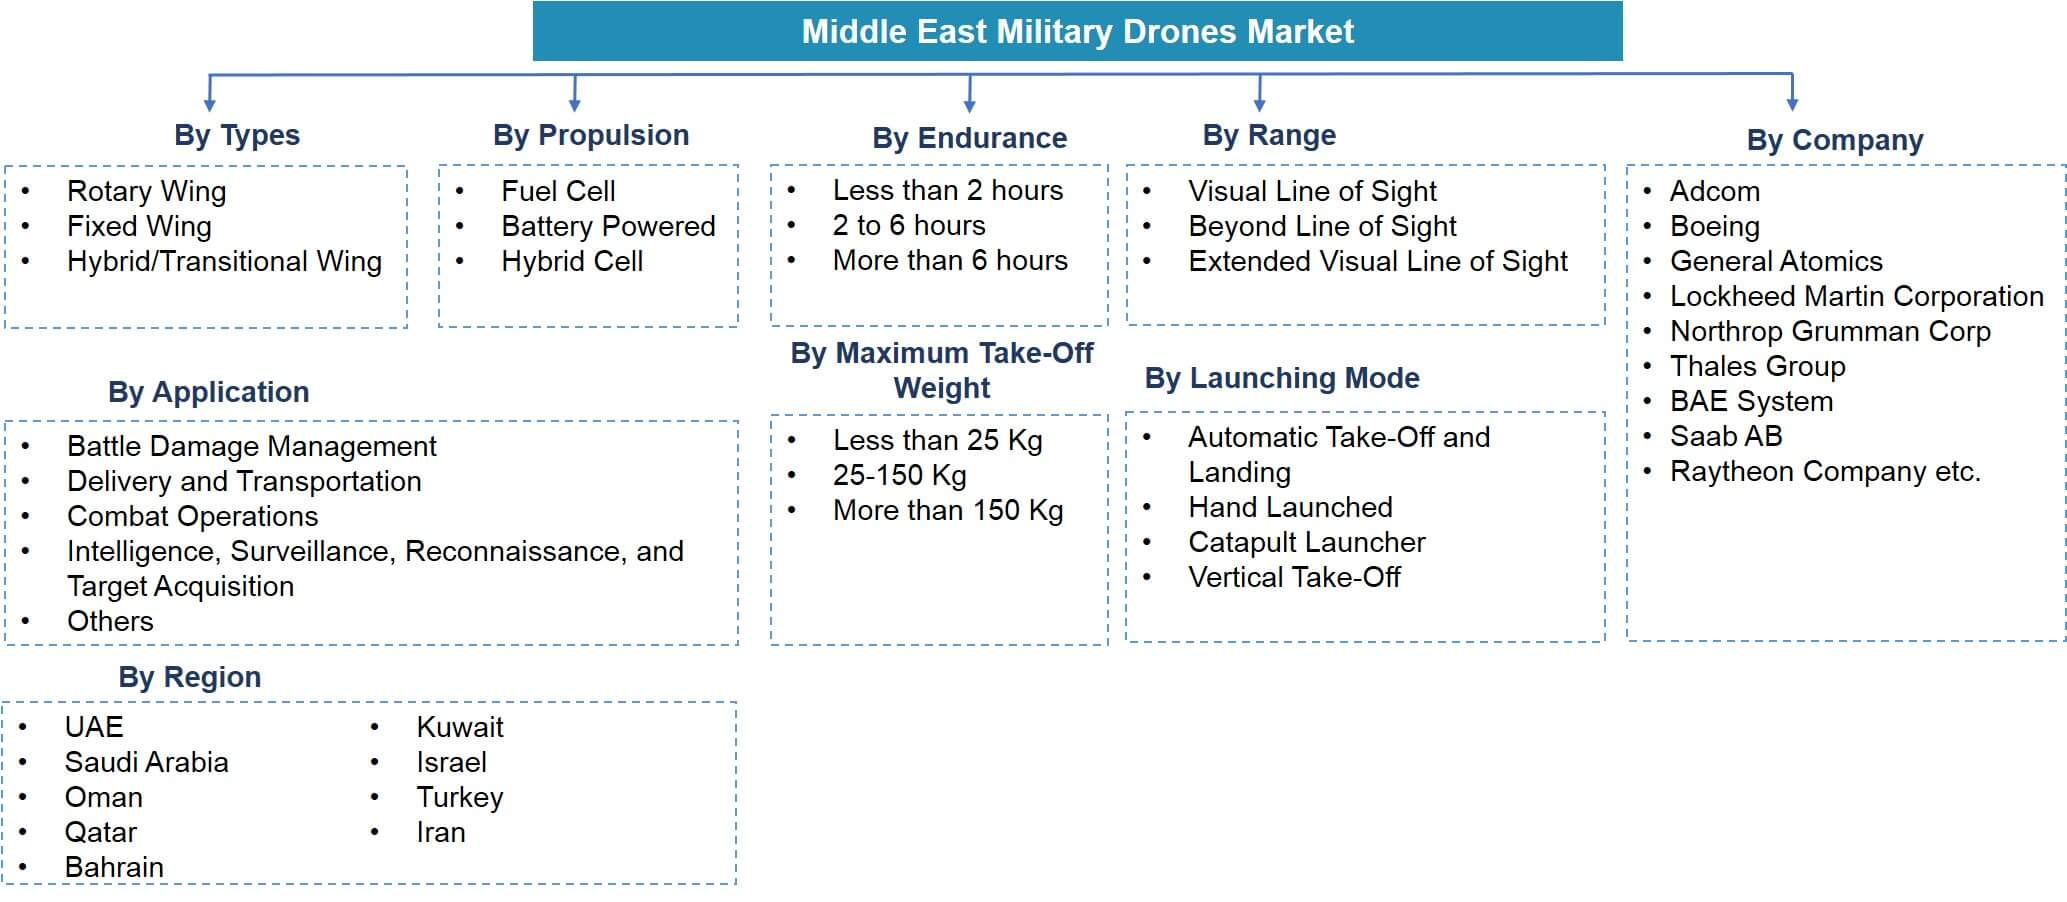 Middle East Military Drones Market Segmentation